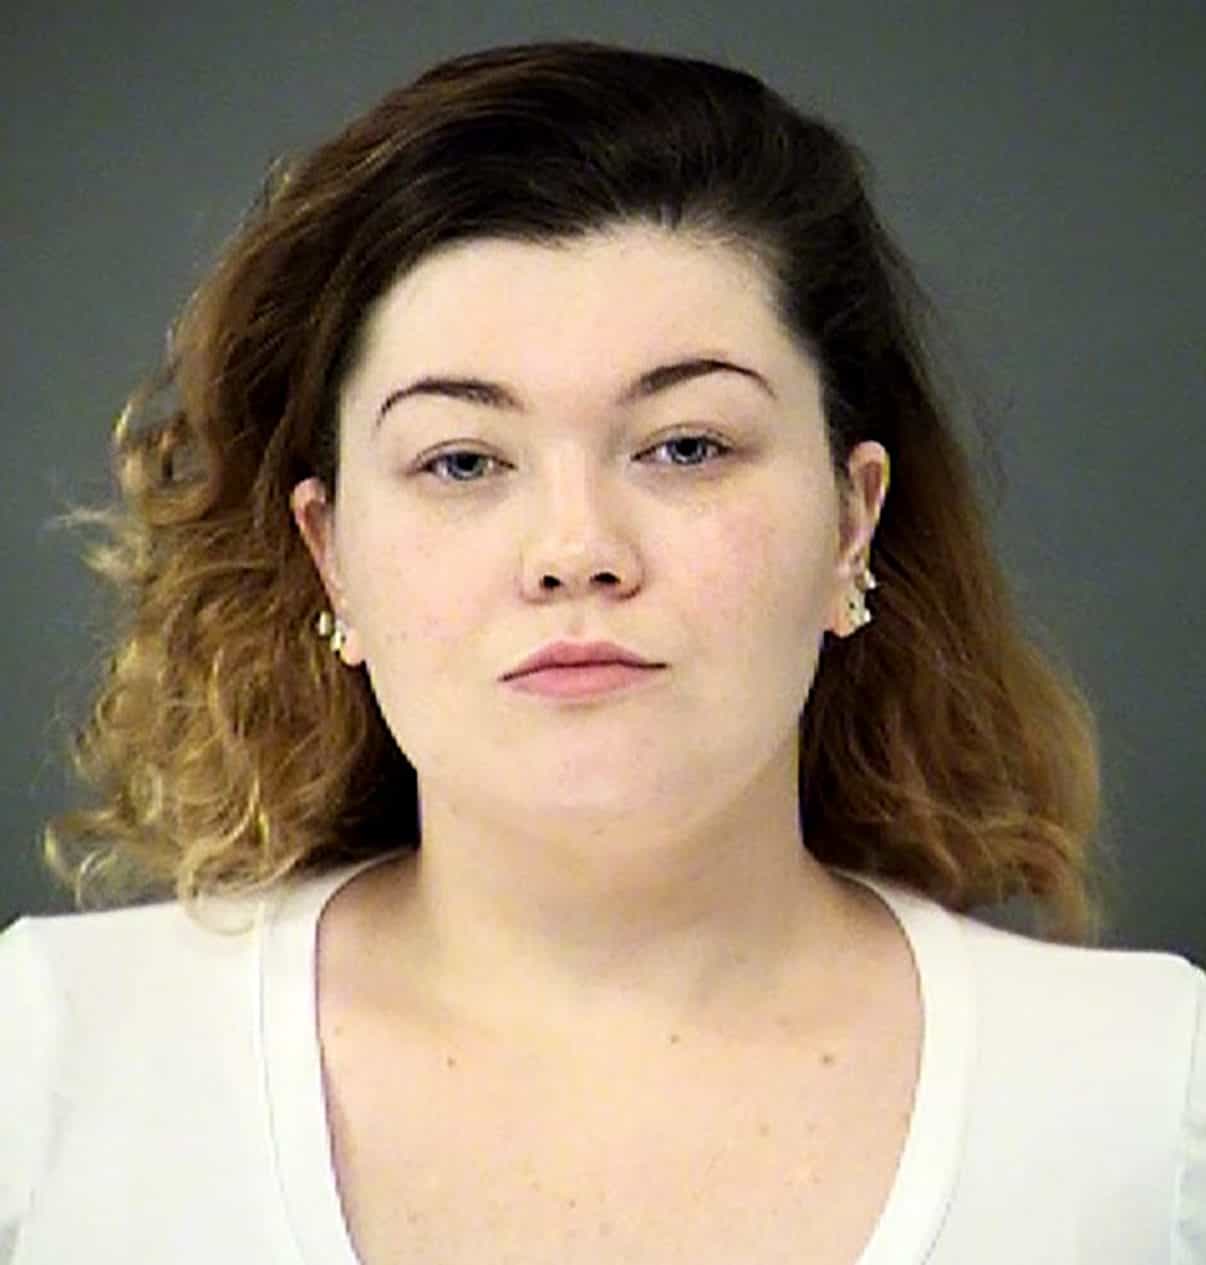 Amber Portwood Arrested for Domestic Battery, Boyfriend Alleges Assault